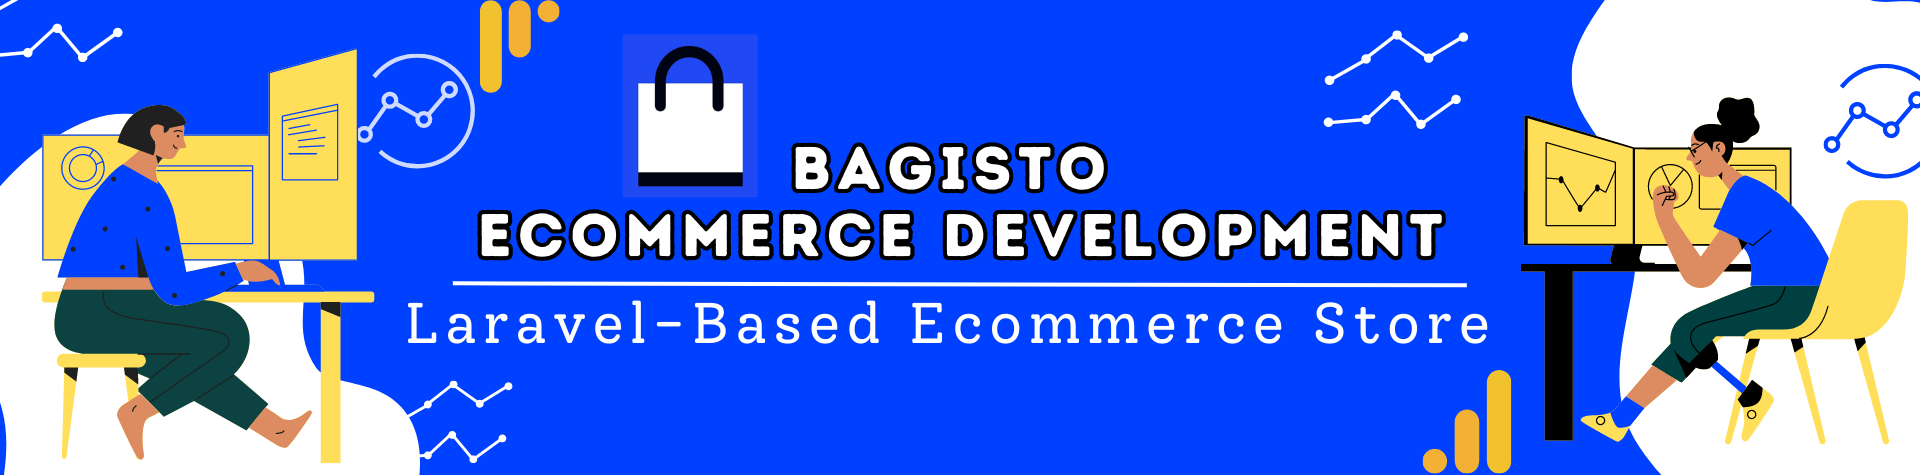 Baggisto_Ecommerce_Development_1_